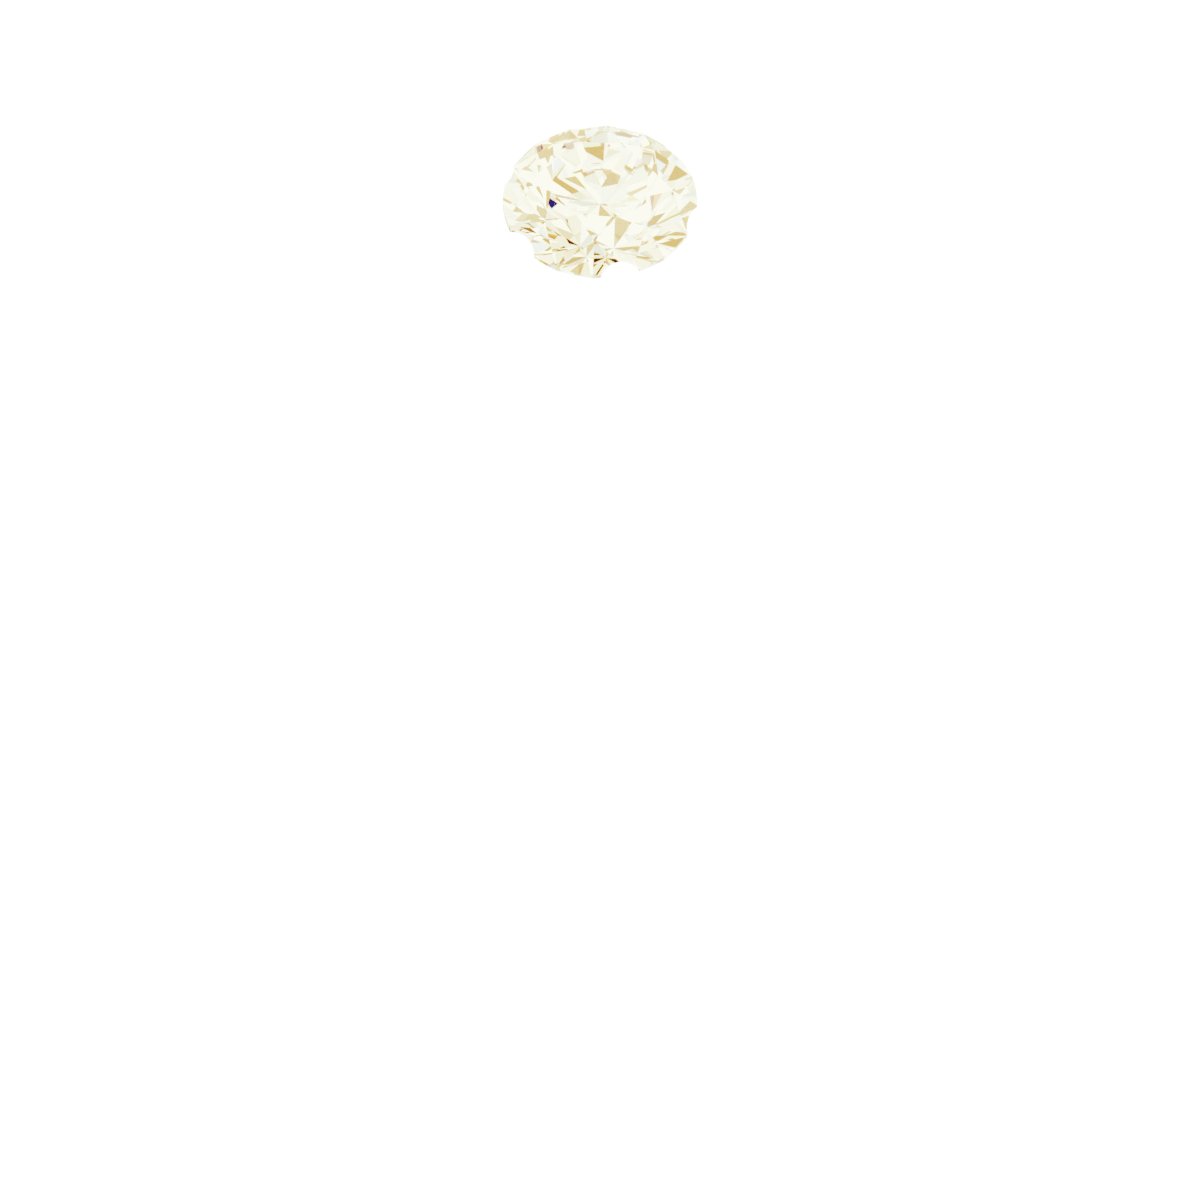 https://meteor.stullercloud.com/das/98808907?obj=stones/diamonds/g_Center&obj=metals&obj=metals&obj.recipe=yellow&$xlarge$